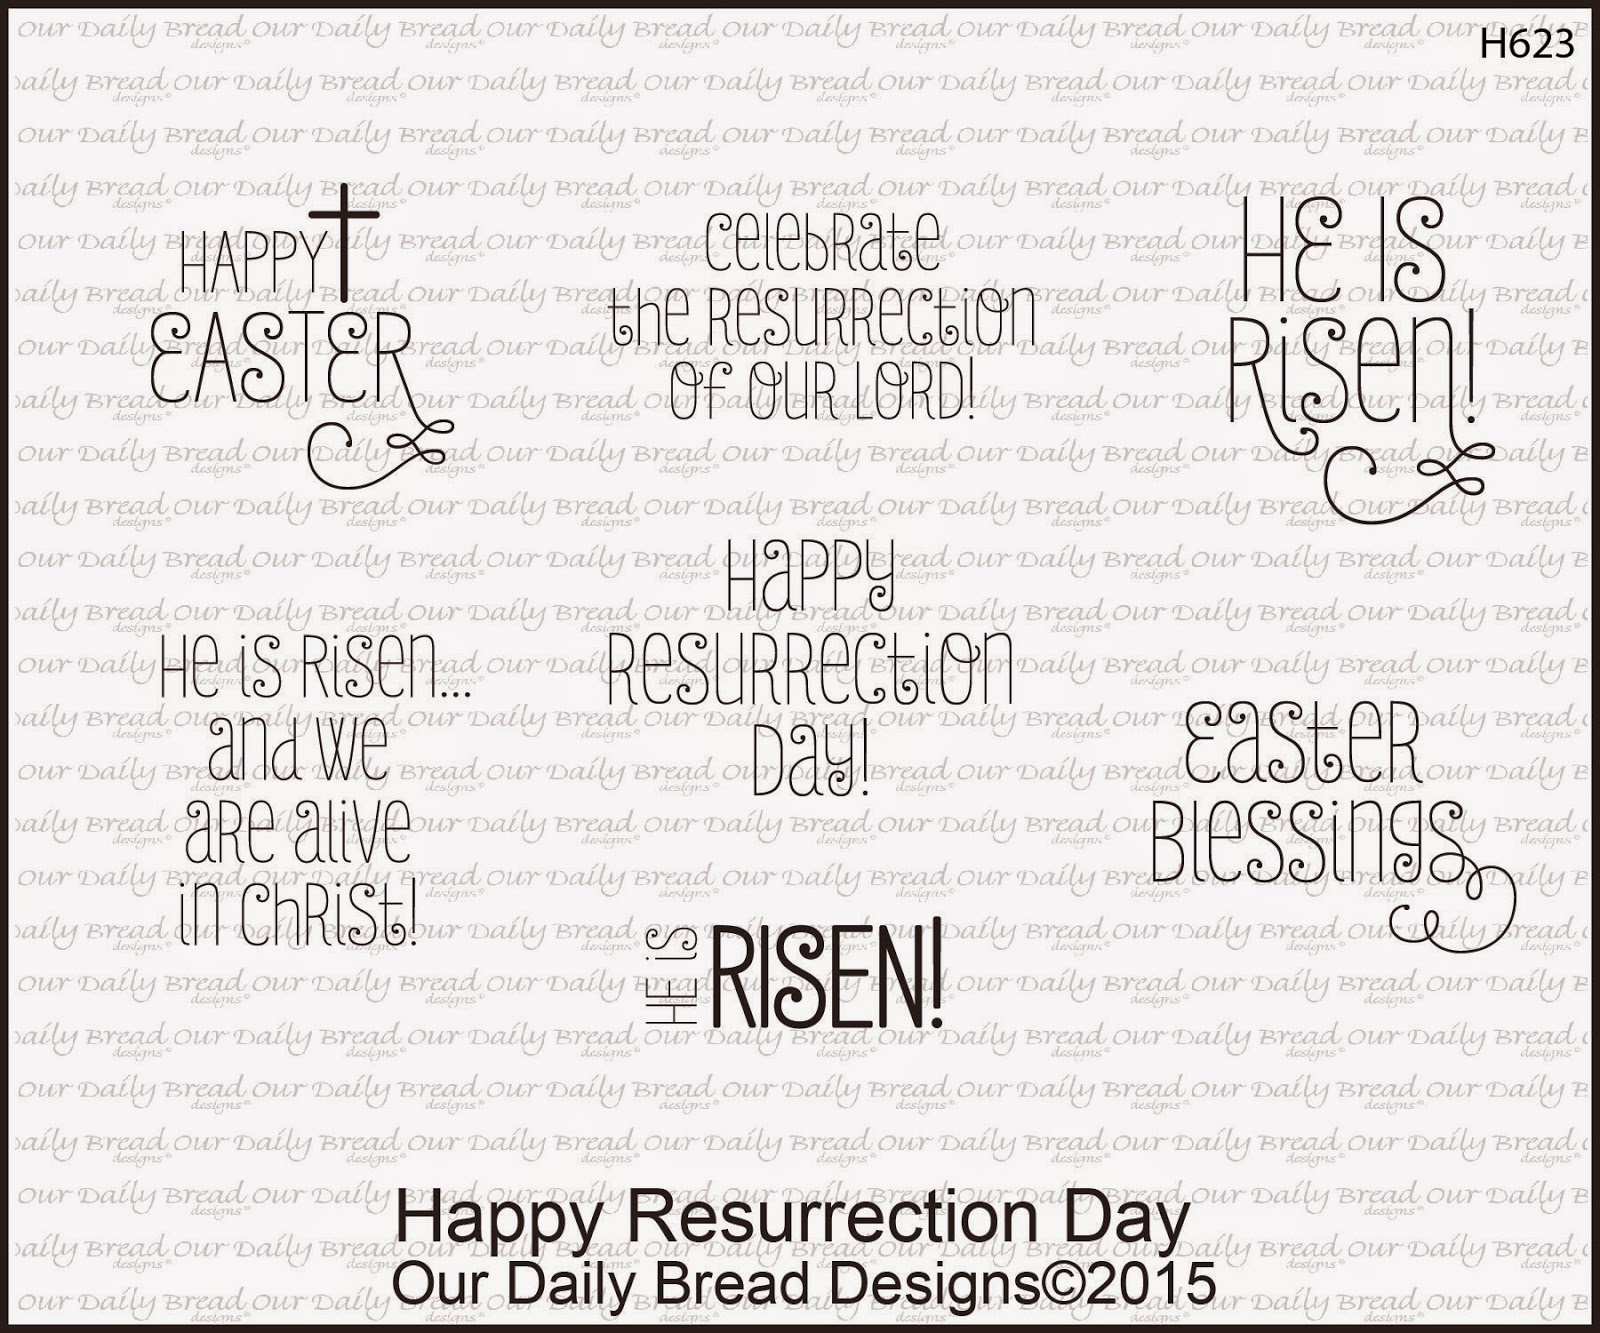  ODBD Happy Resurrection Day